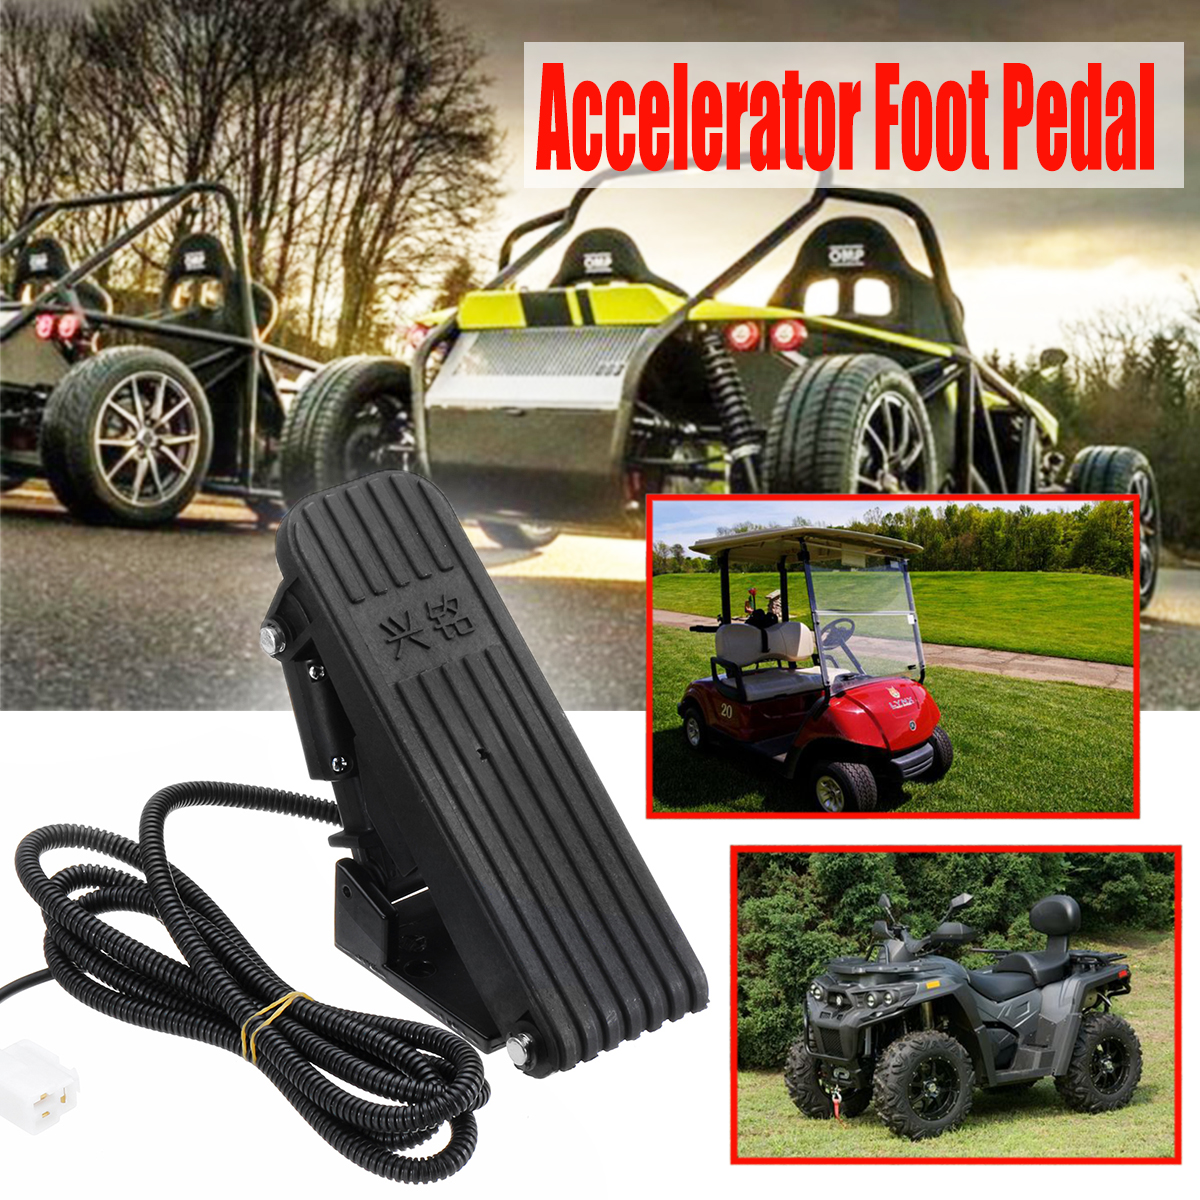 Accelerator Foot Pedal